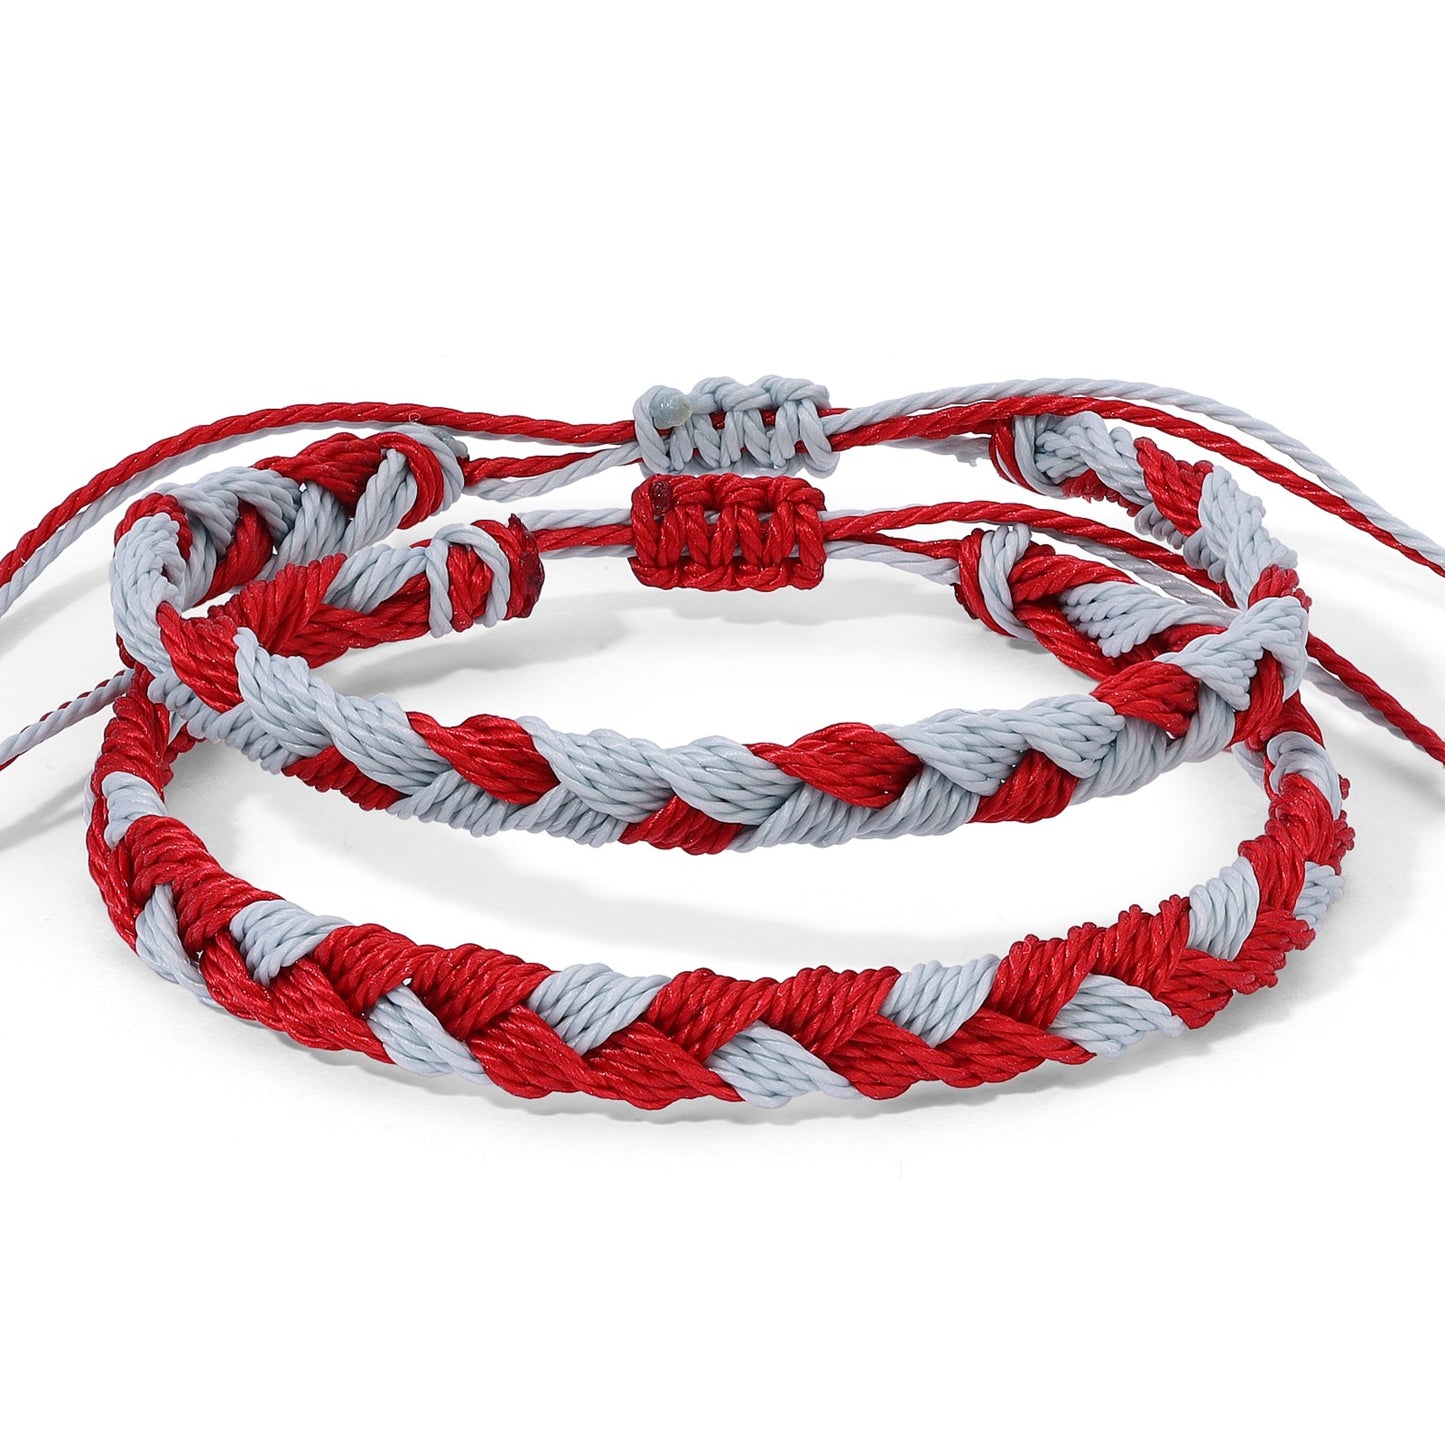 Crimson and Gray Team Color Braided Bracelets - Set of 2